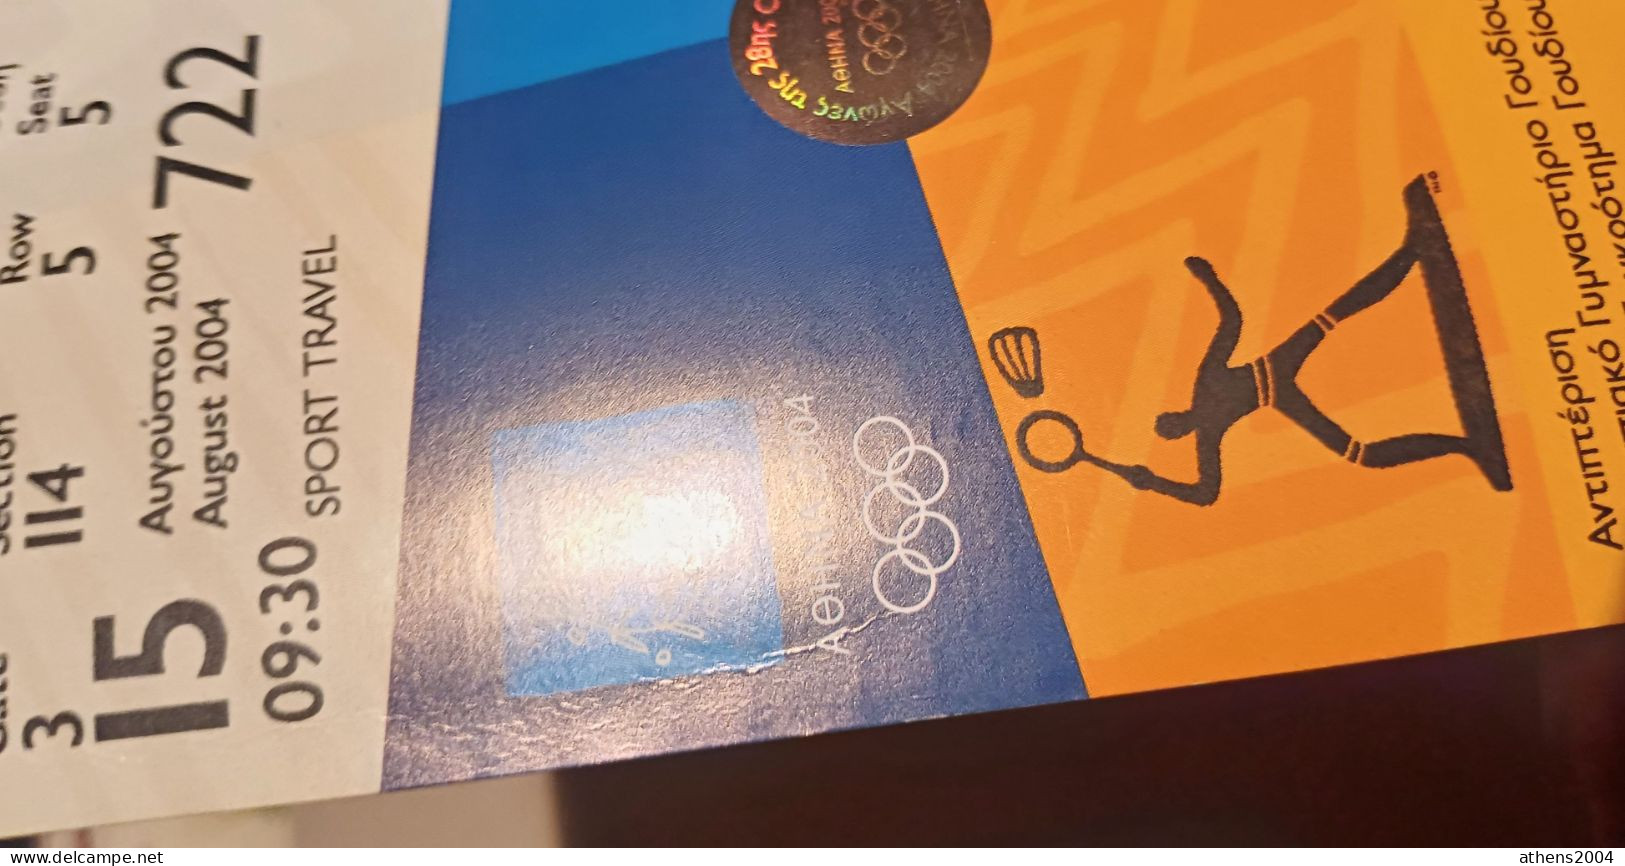 Athens 2004 Olympic Games -  Badminton Unused Ticket, Code: 722 - Bekleidung, Souvenirs Und Sonstige